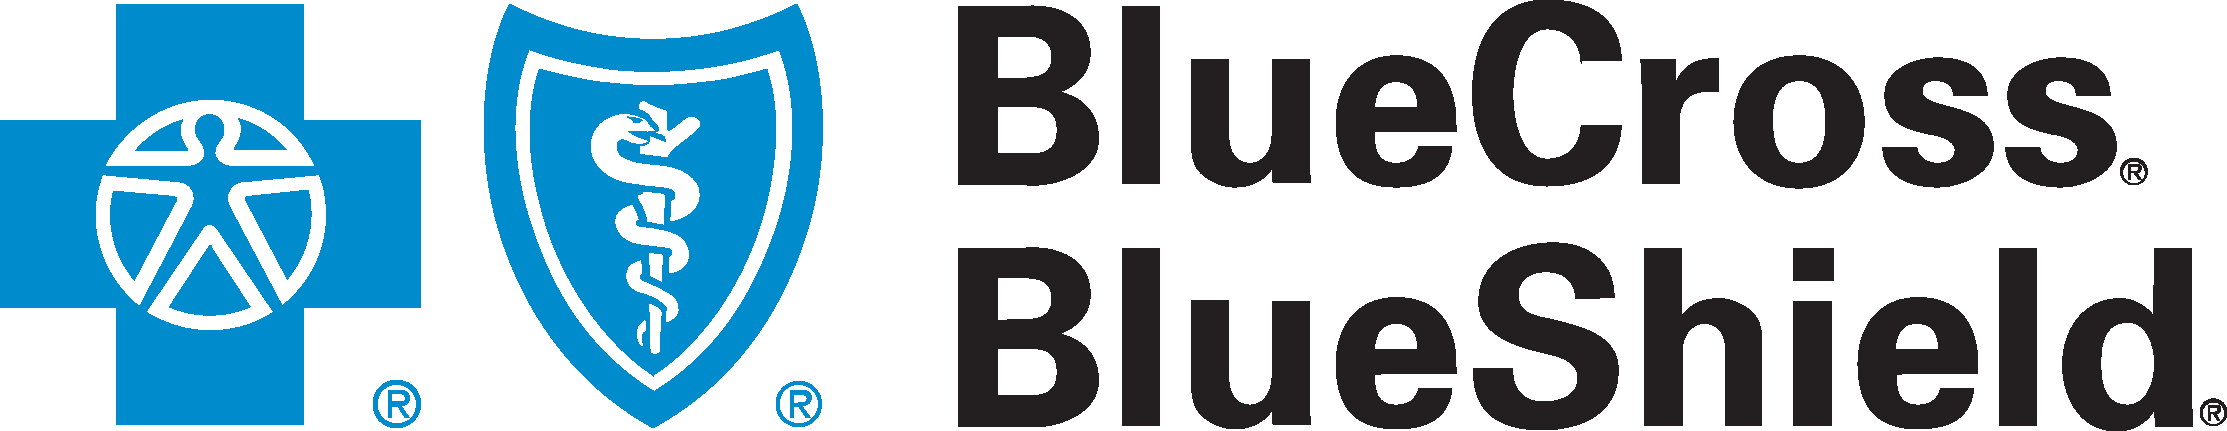 Blue Cross Blue Shield Logo png